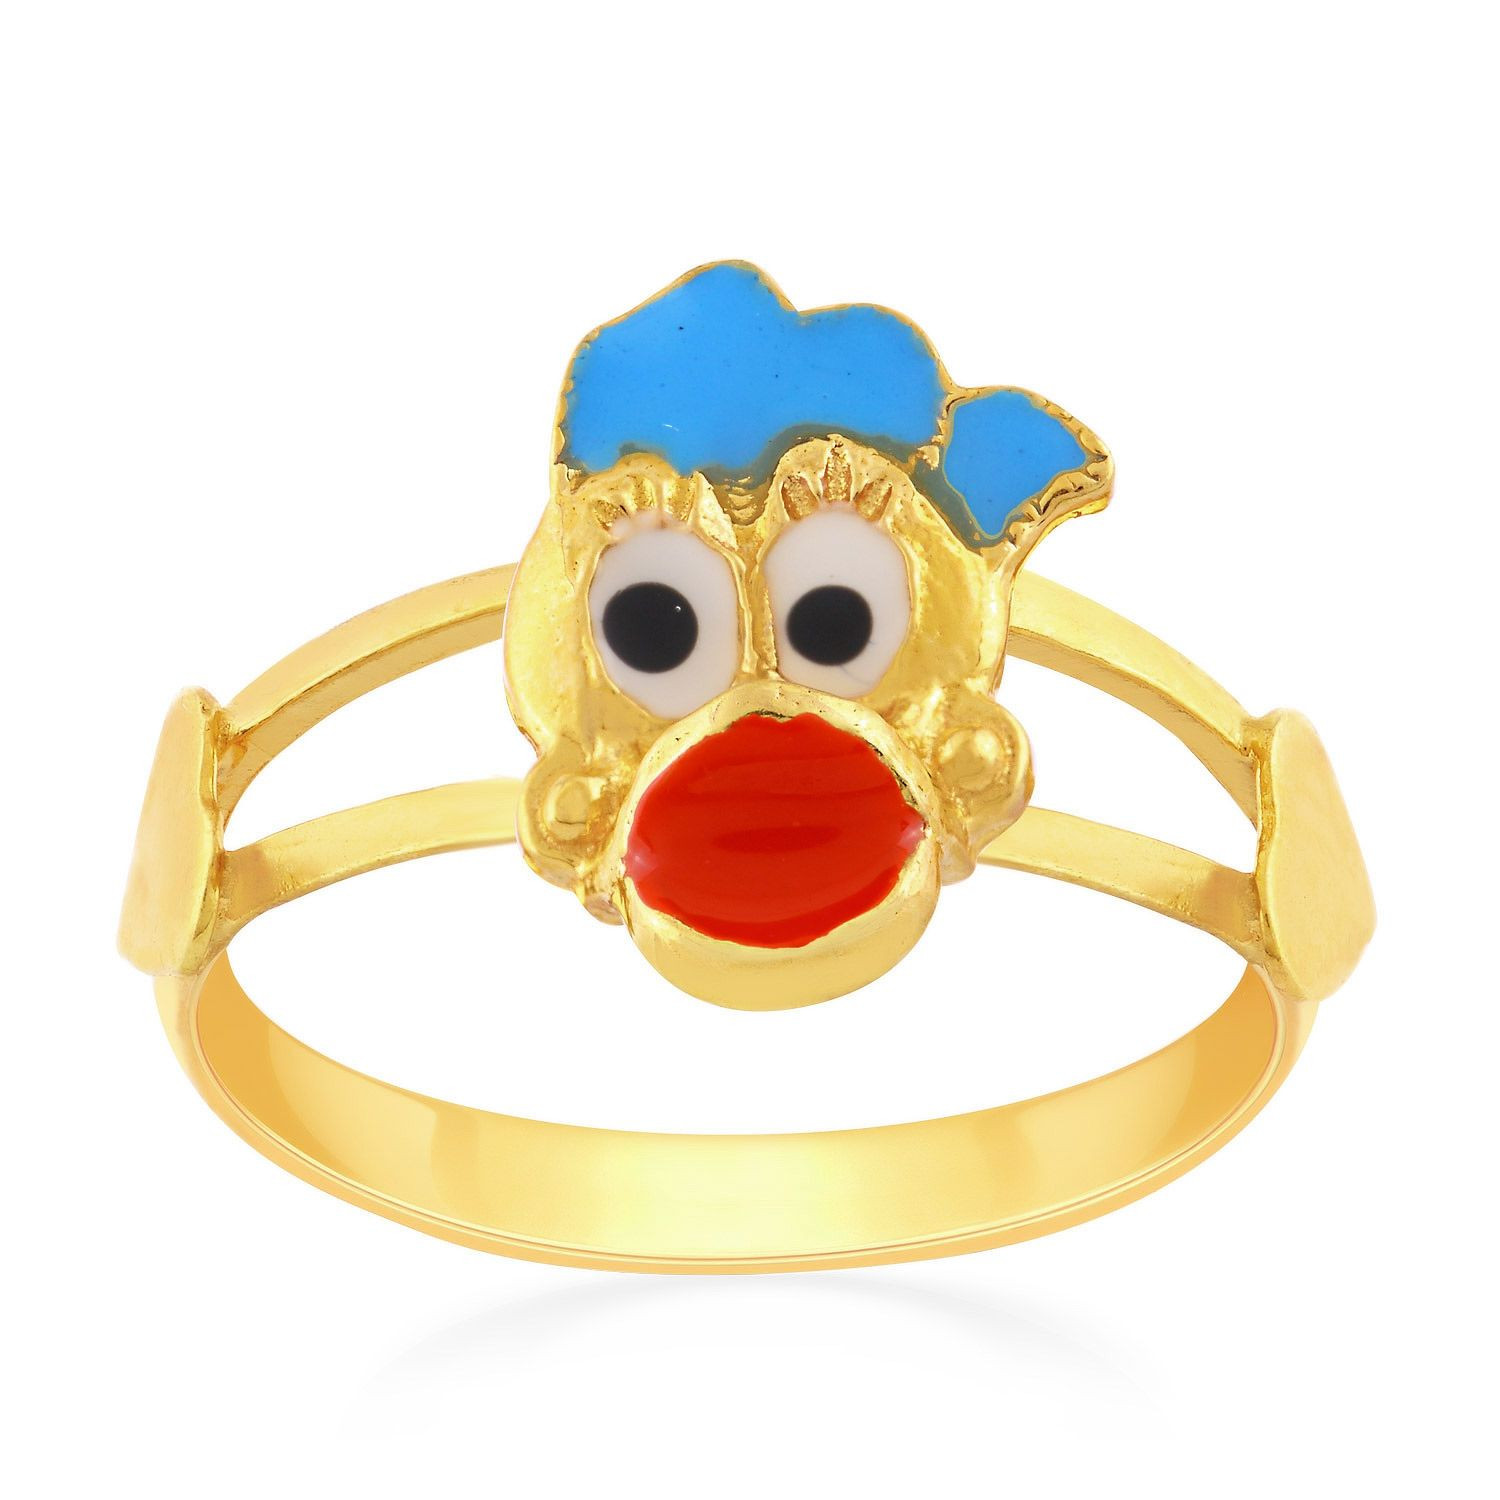 Children's 10k Solid Yellow Gold Open Heart Baby Ring Size 3.5 - Walmart.com